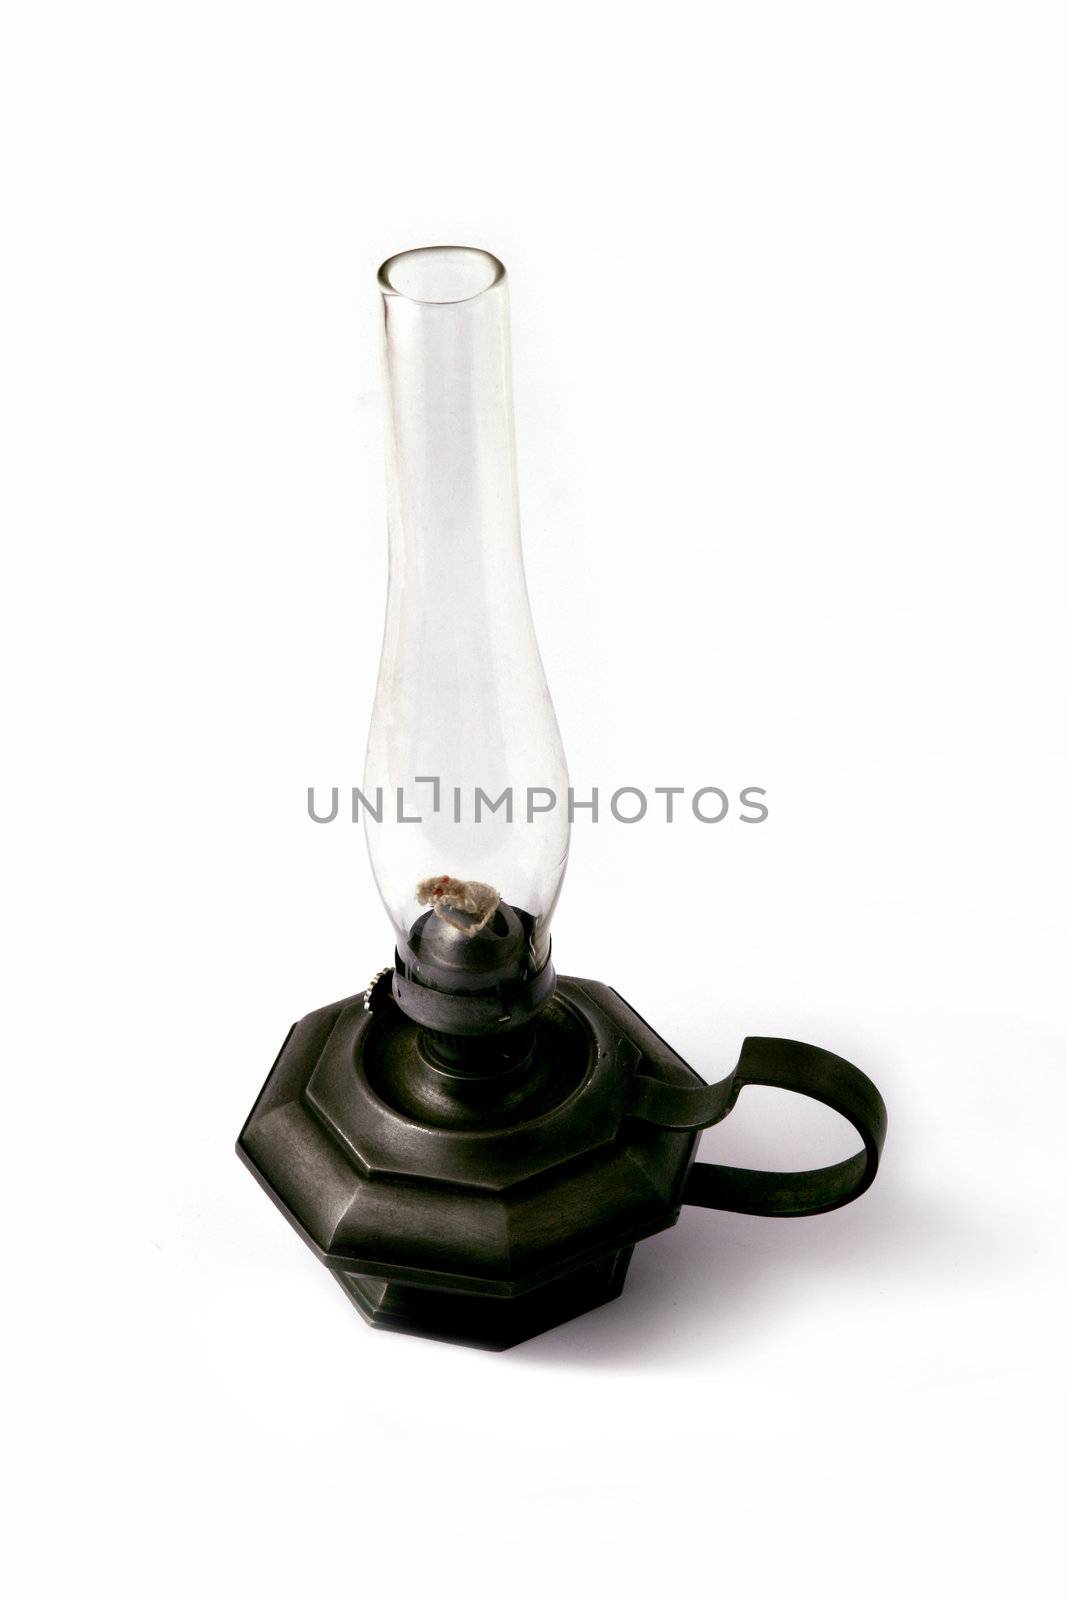 Oil lamp by phovoir